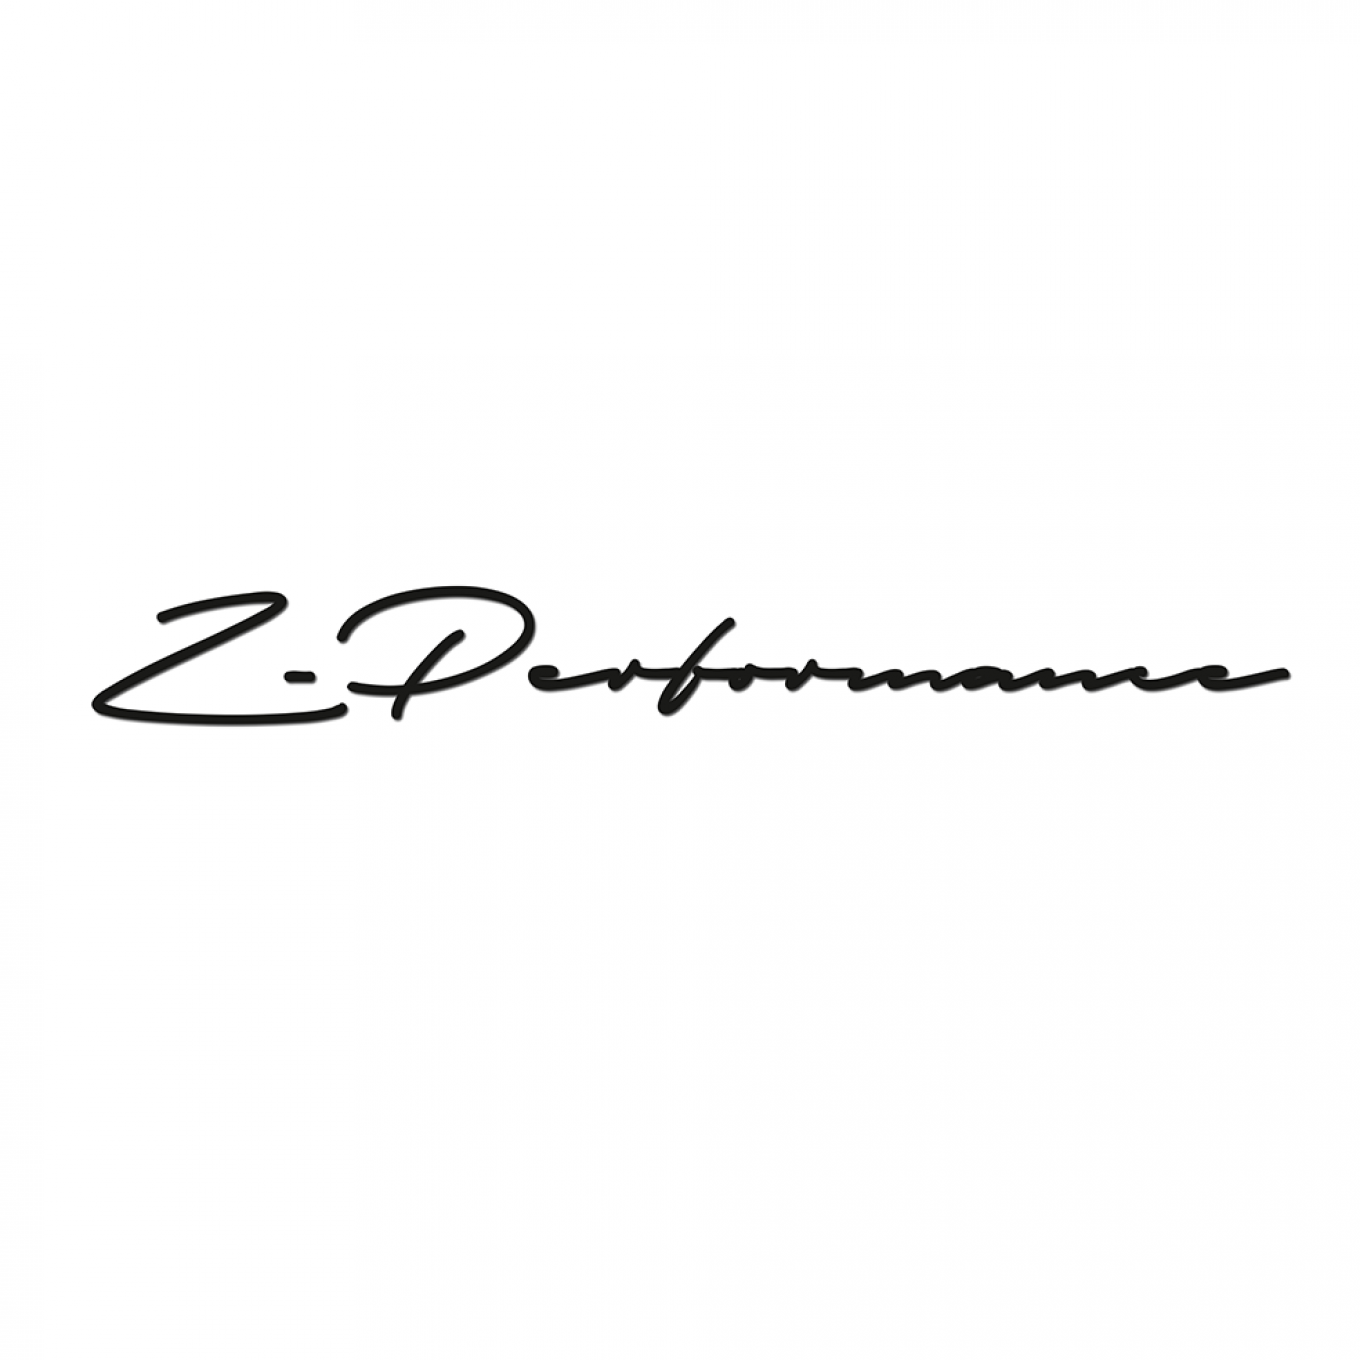 Z-Performance Signature Sticker| 25 cm | White